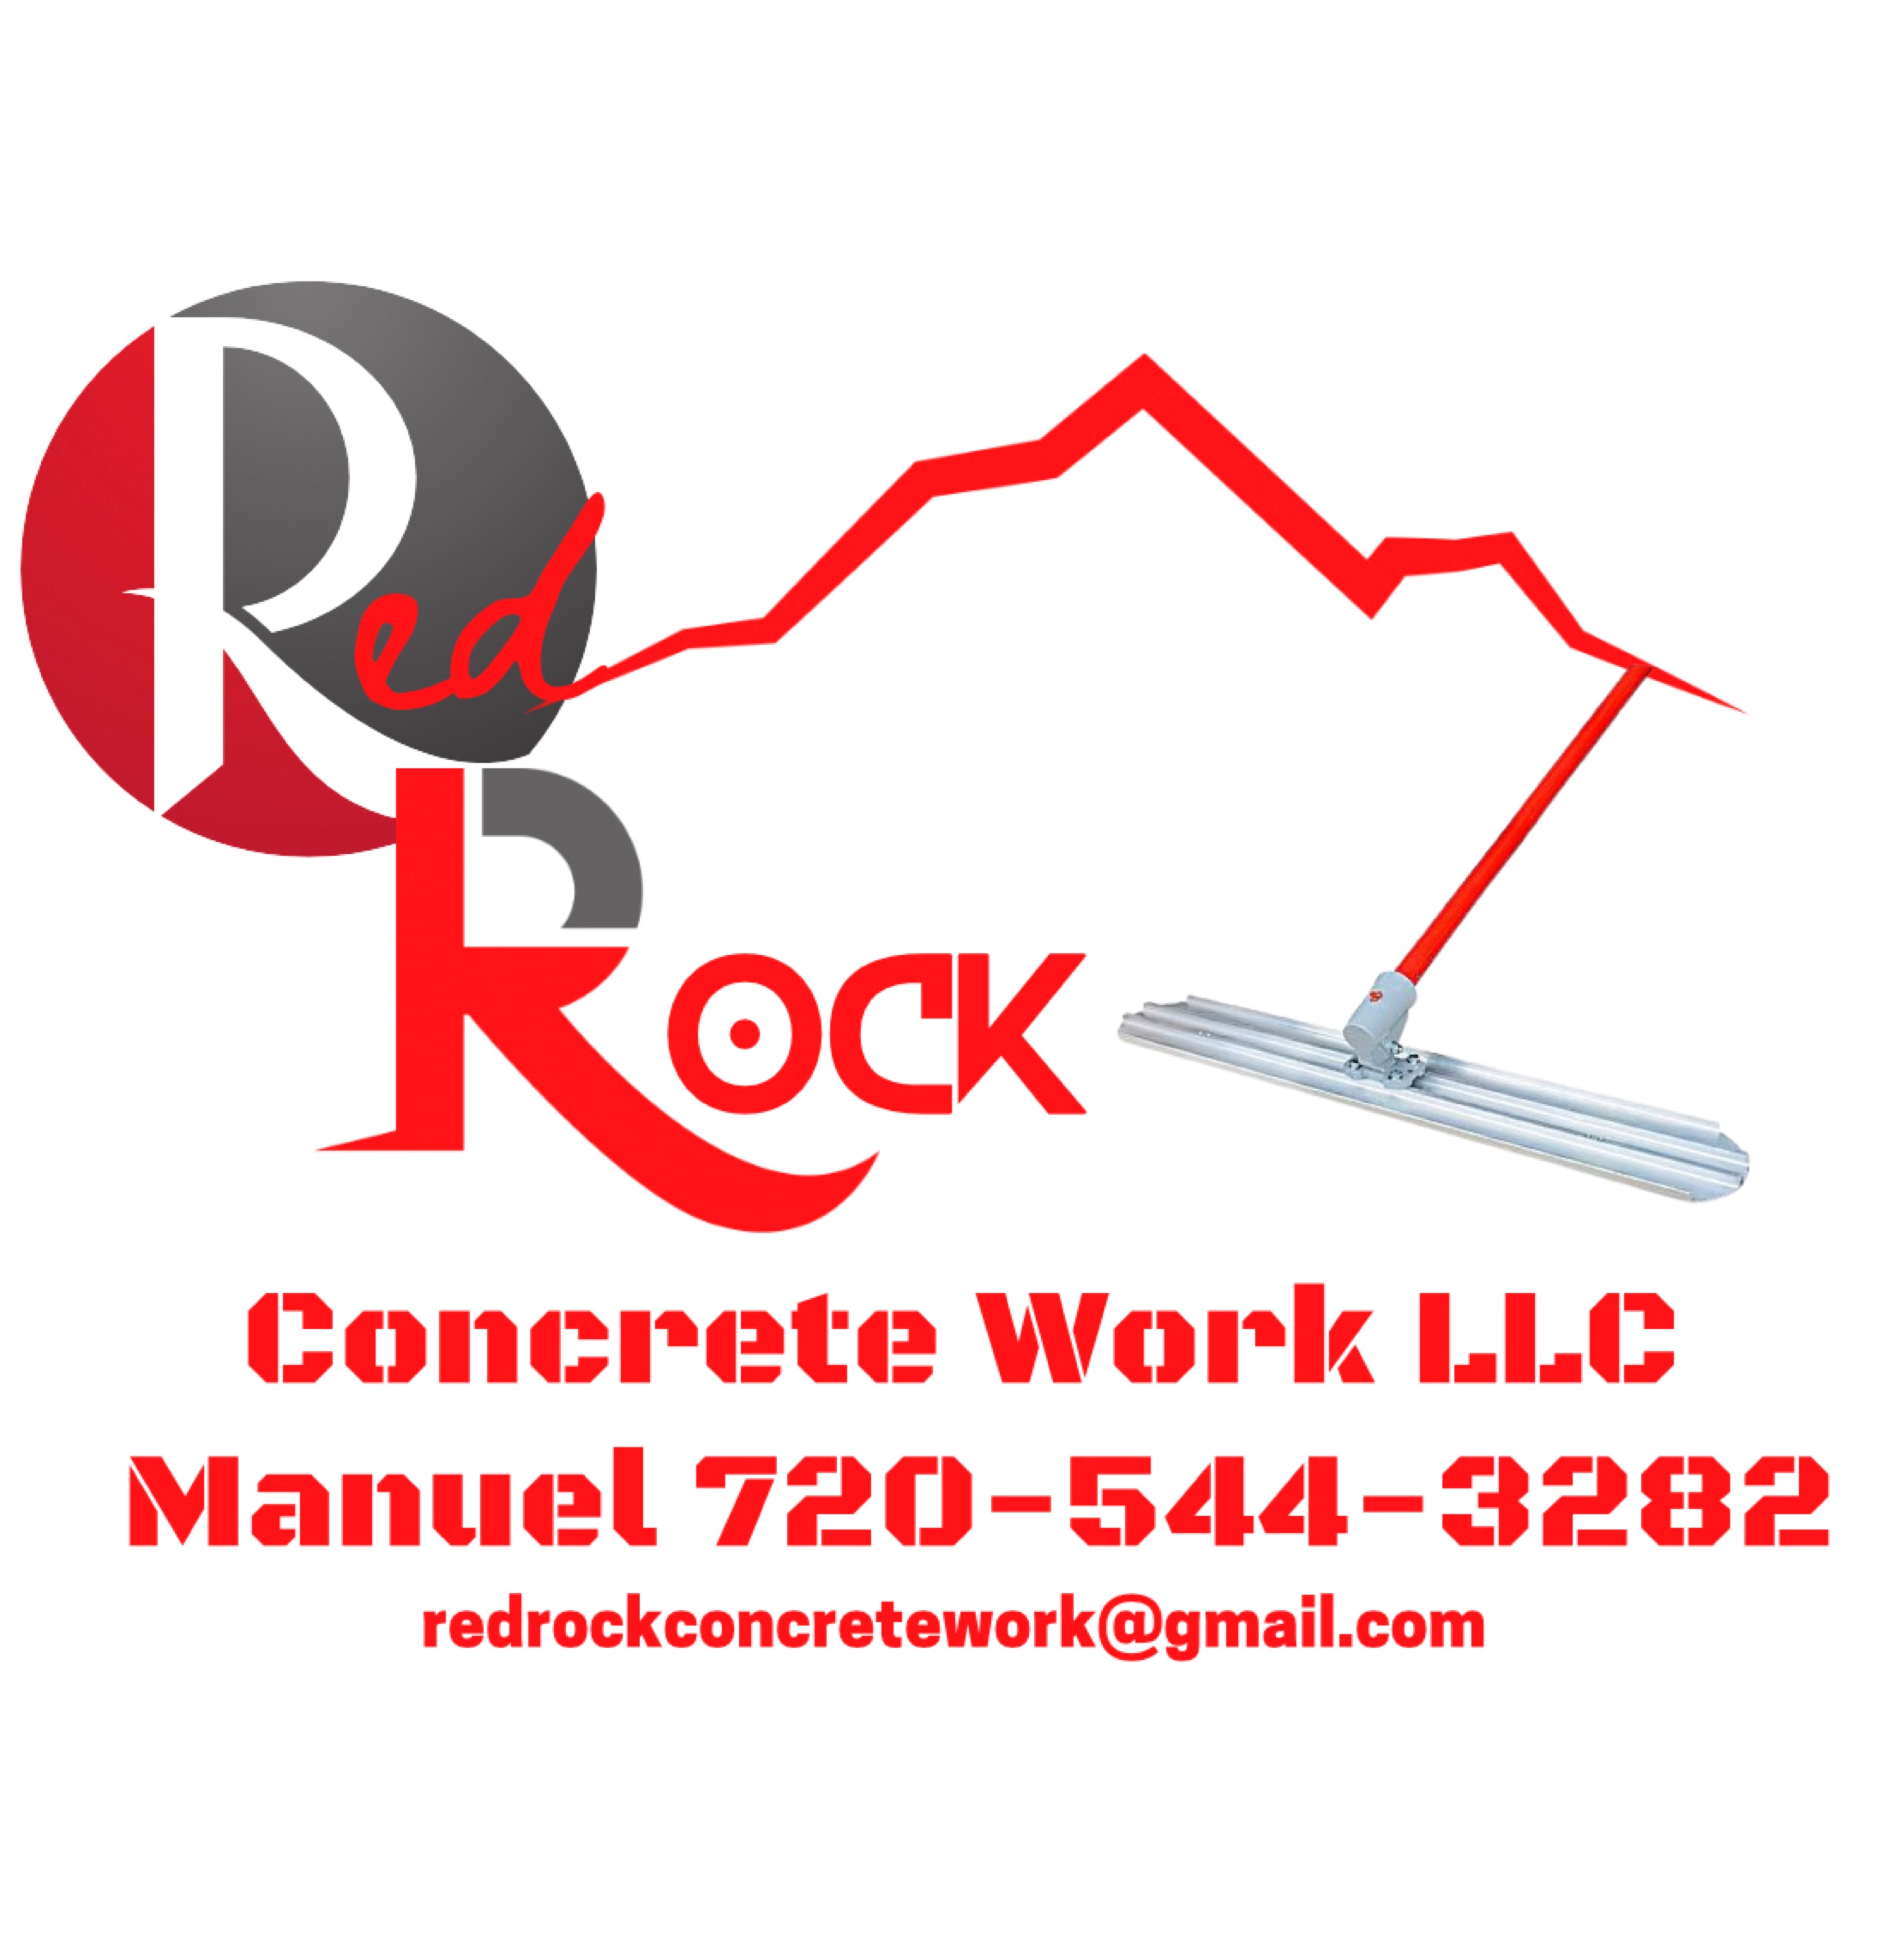 Red Rock Concrete Work, LLC Logo